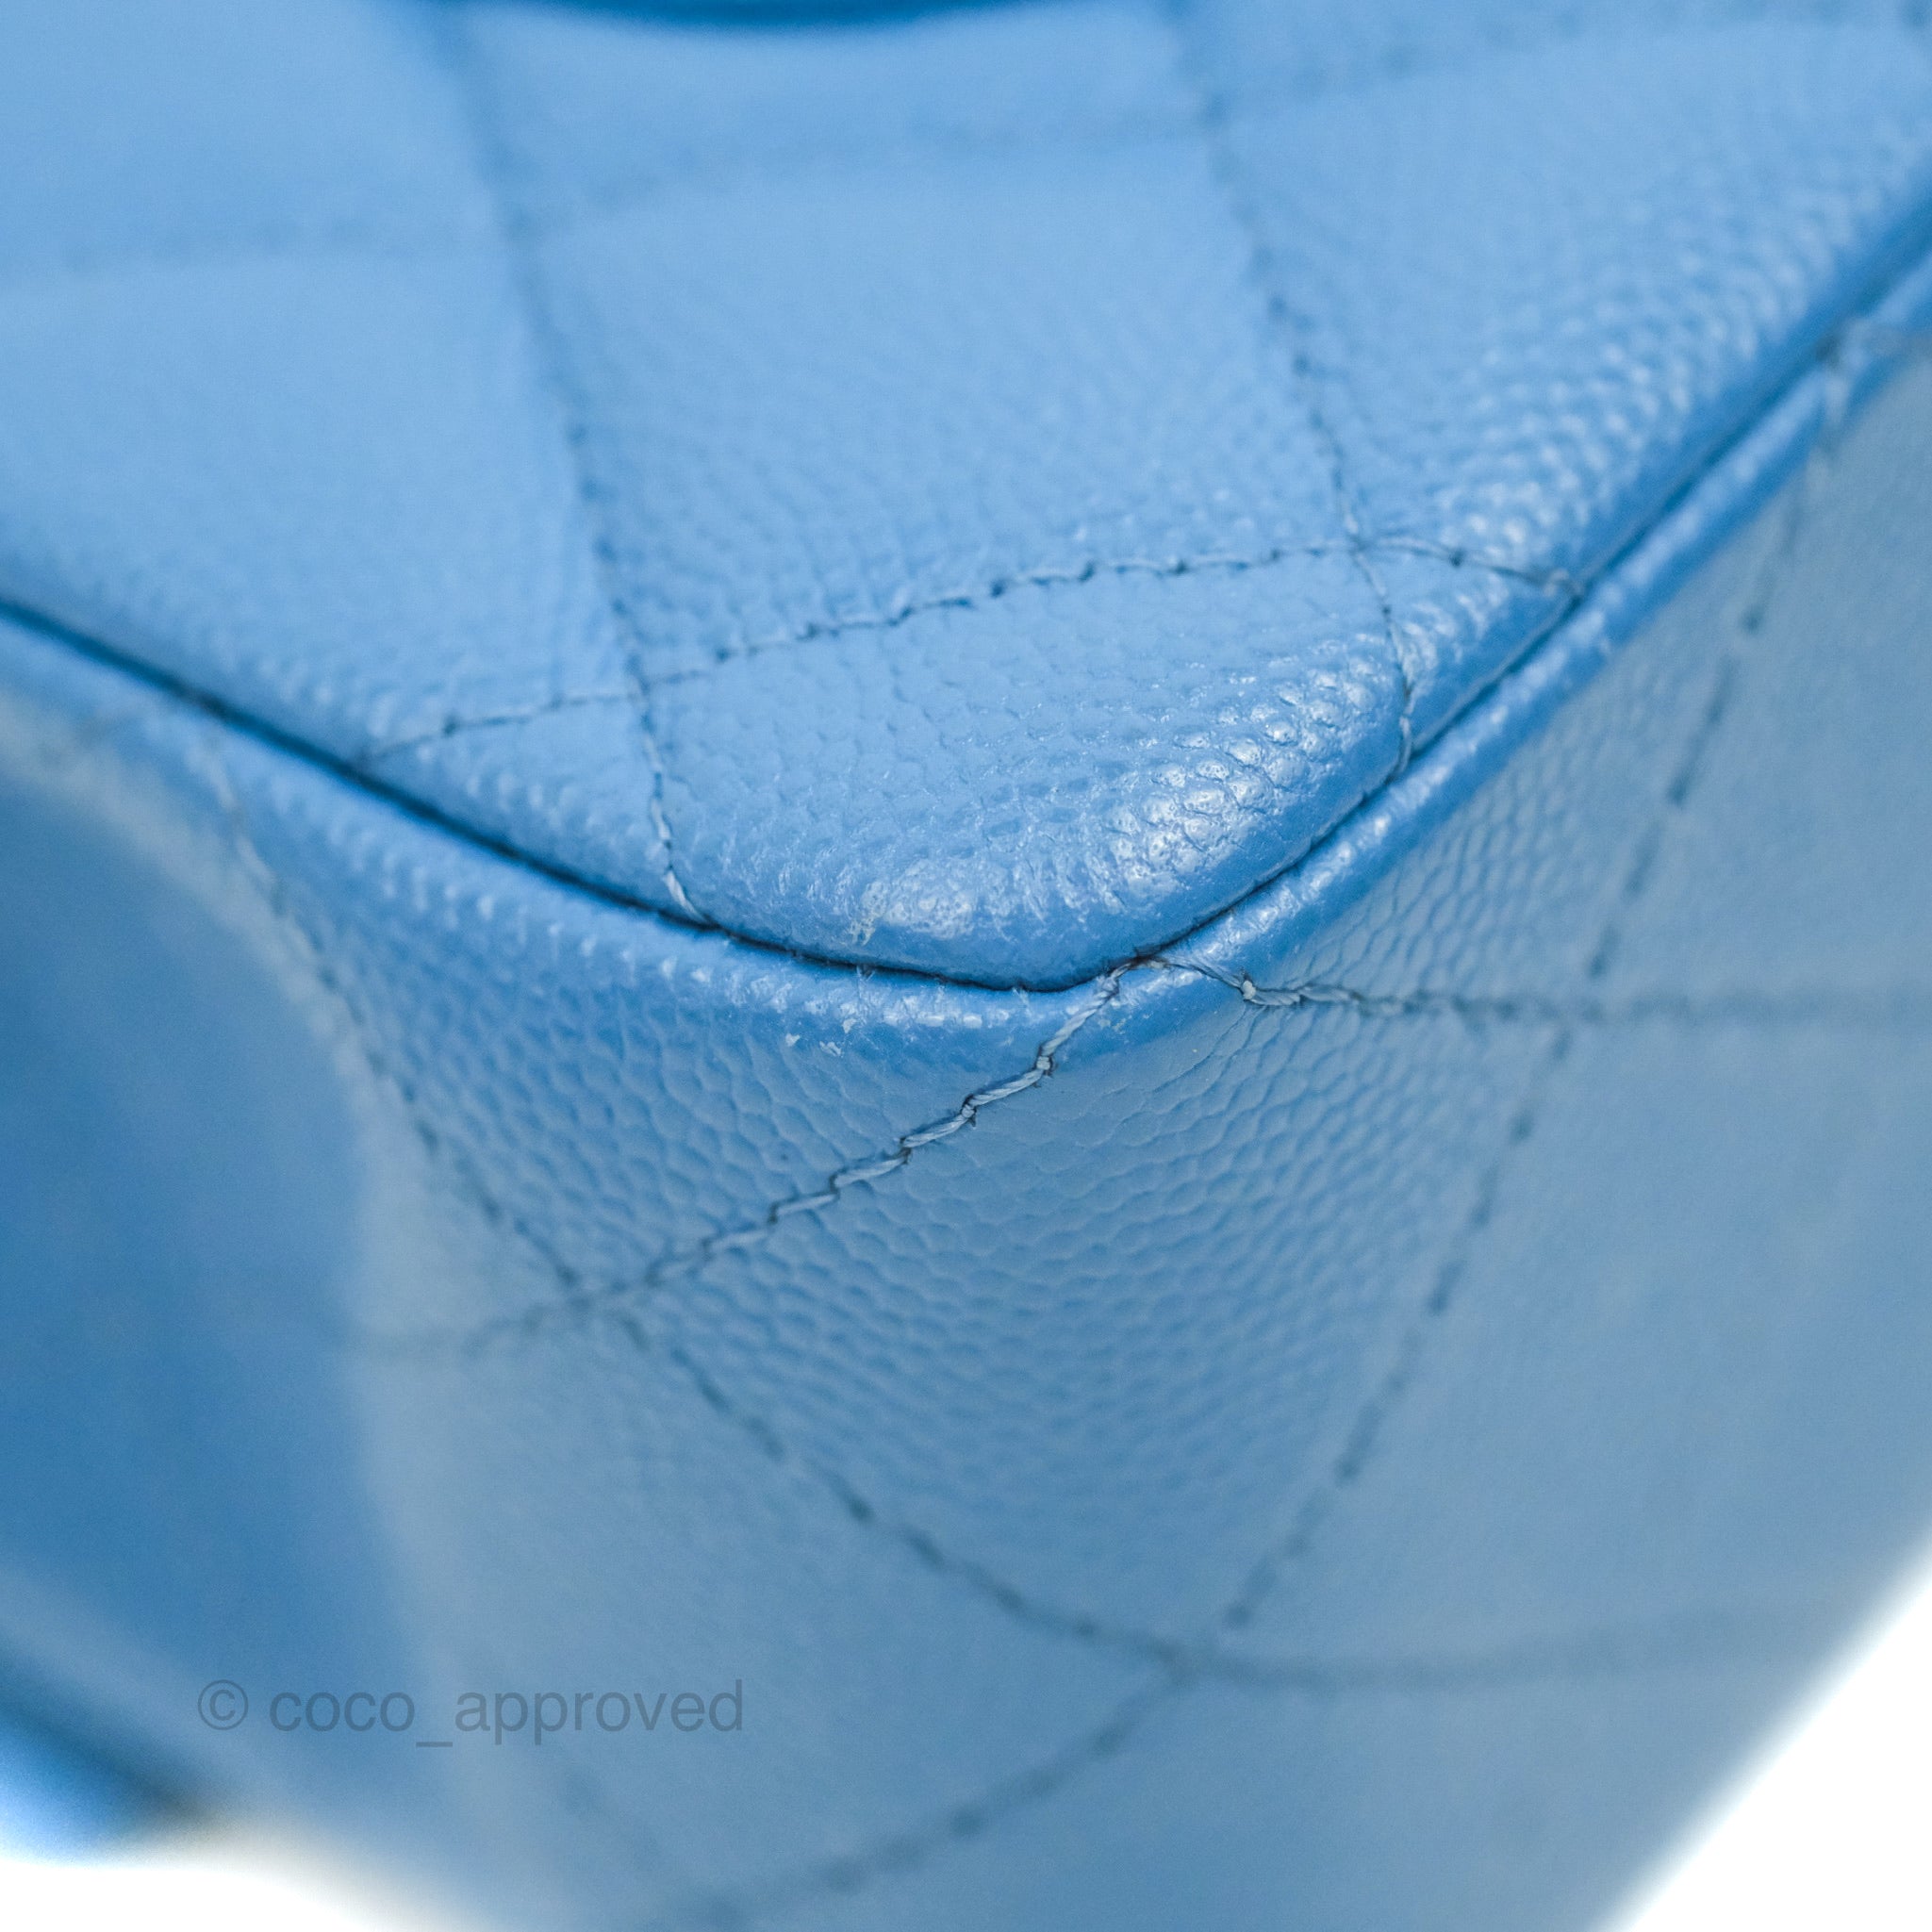 Chanel Mini Flap Bag AS4263 B13696 NQ337, Blue, One Size